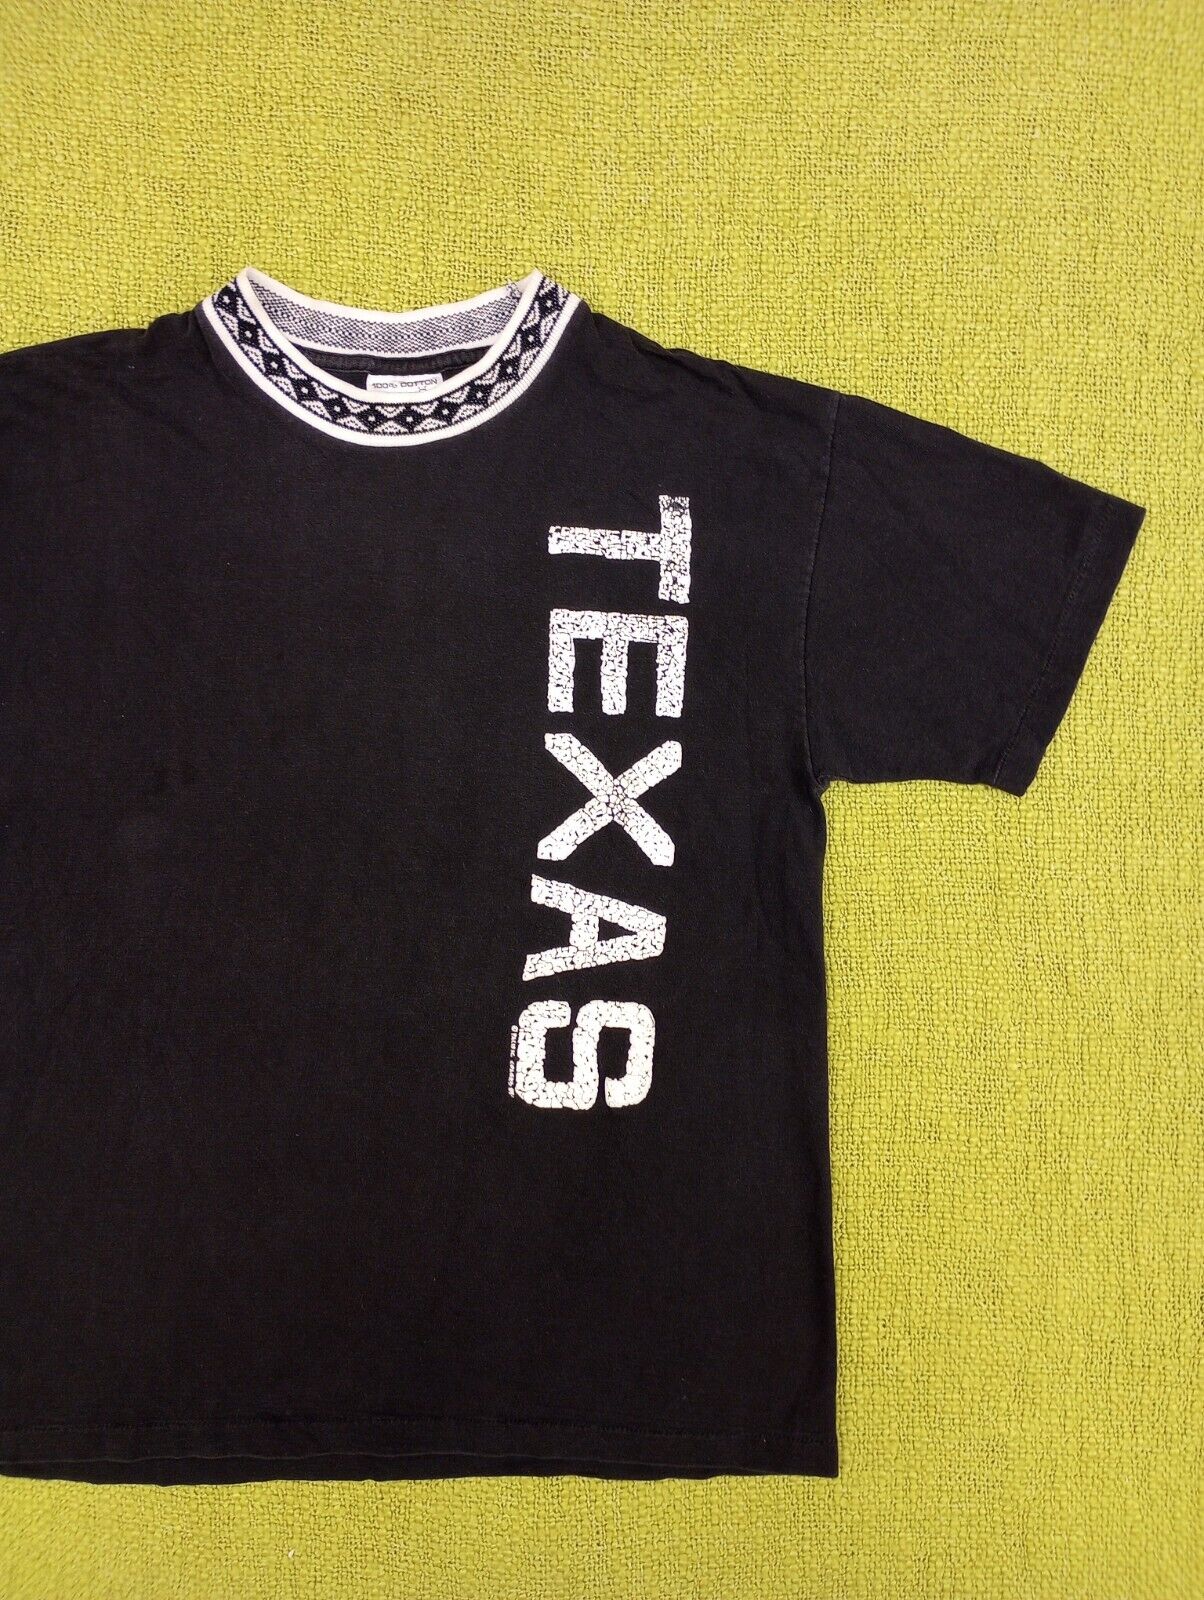 Vintage 80s Texas T-shirt Size Medium - image 7